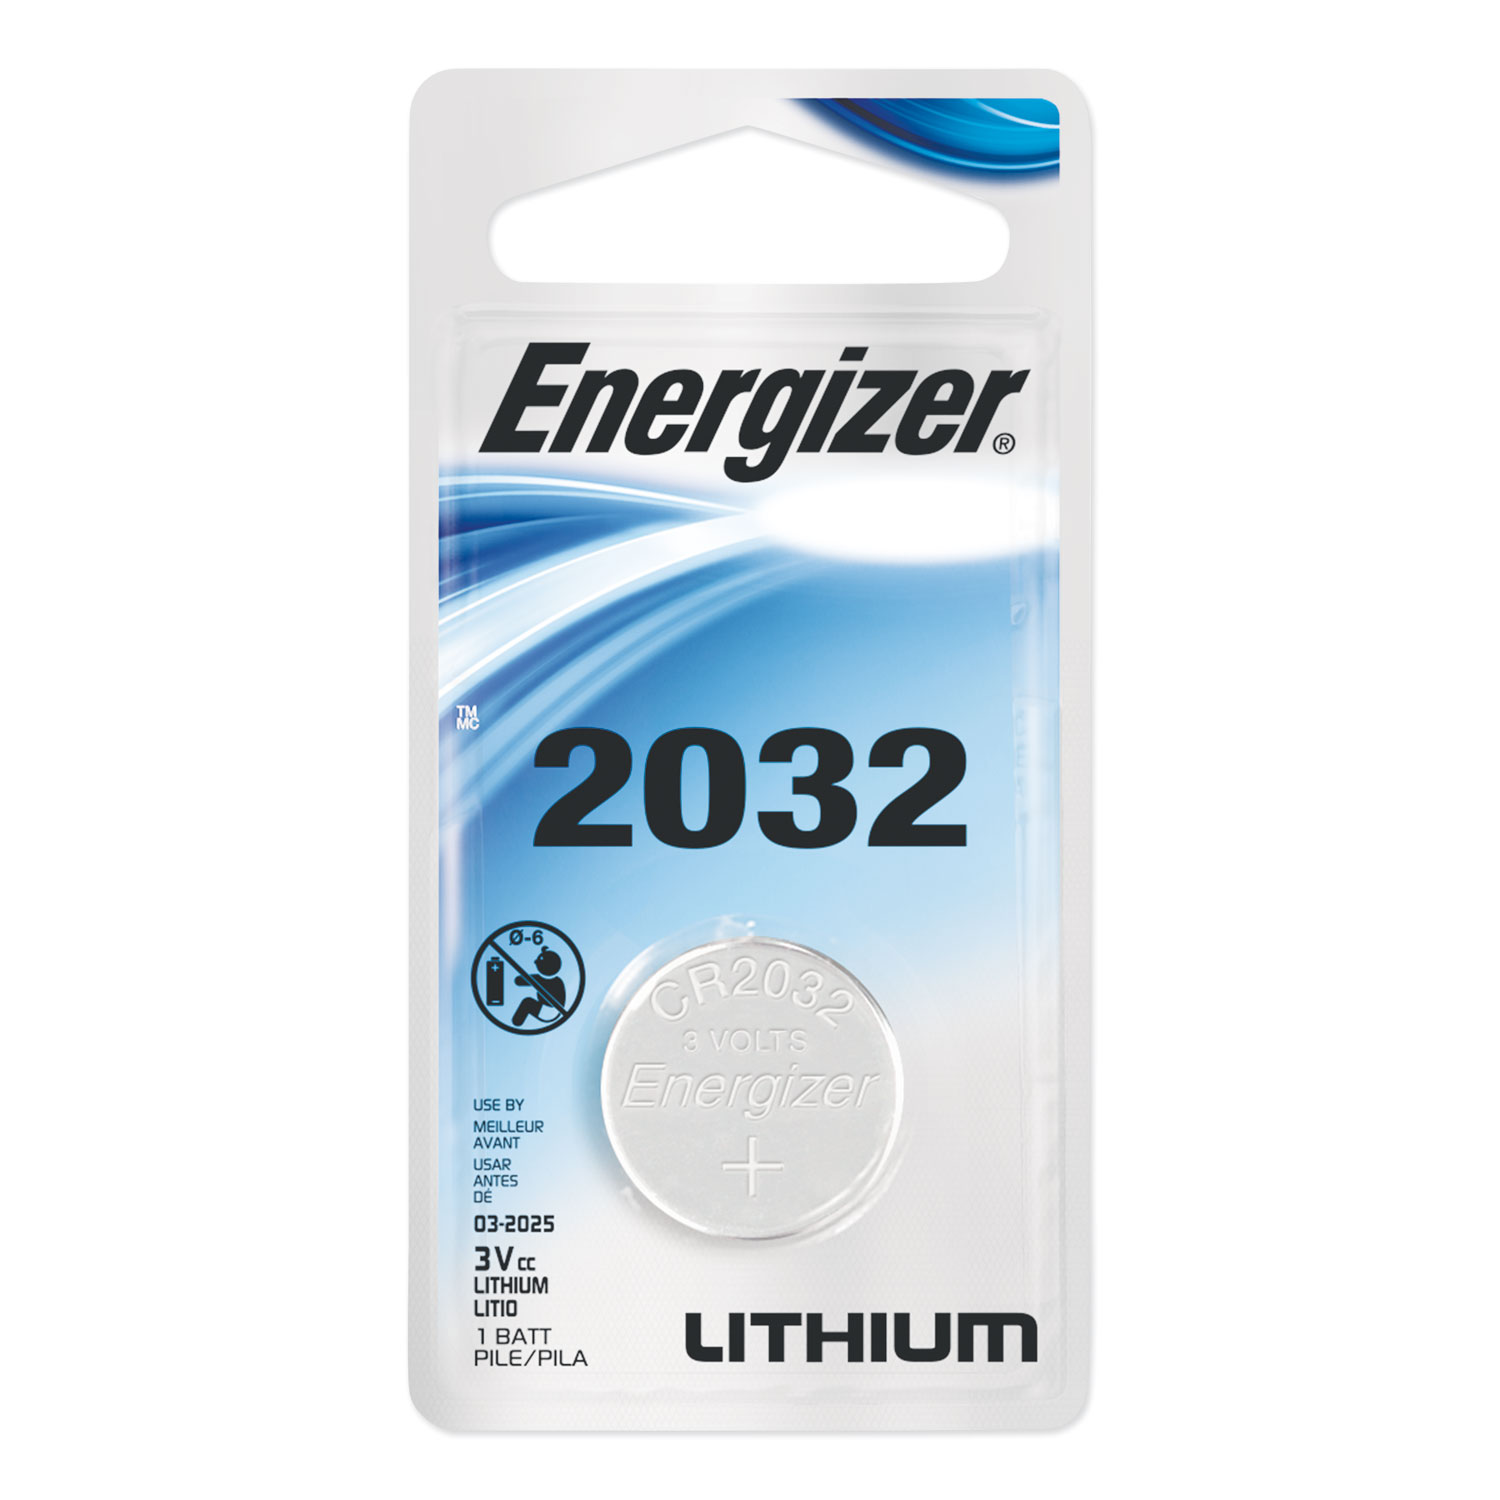 Energizer 2032 Lithium Coin Battery - 3V, 6/Pack, 72/Case